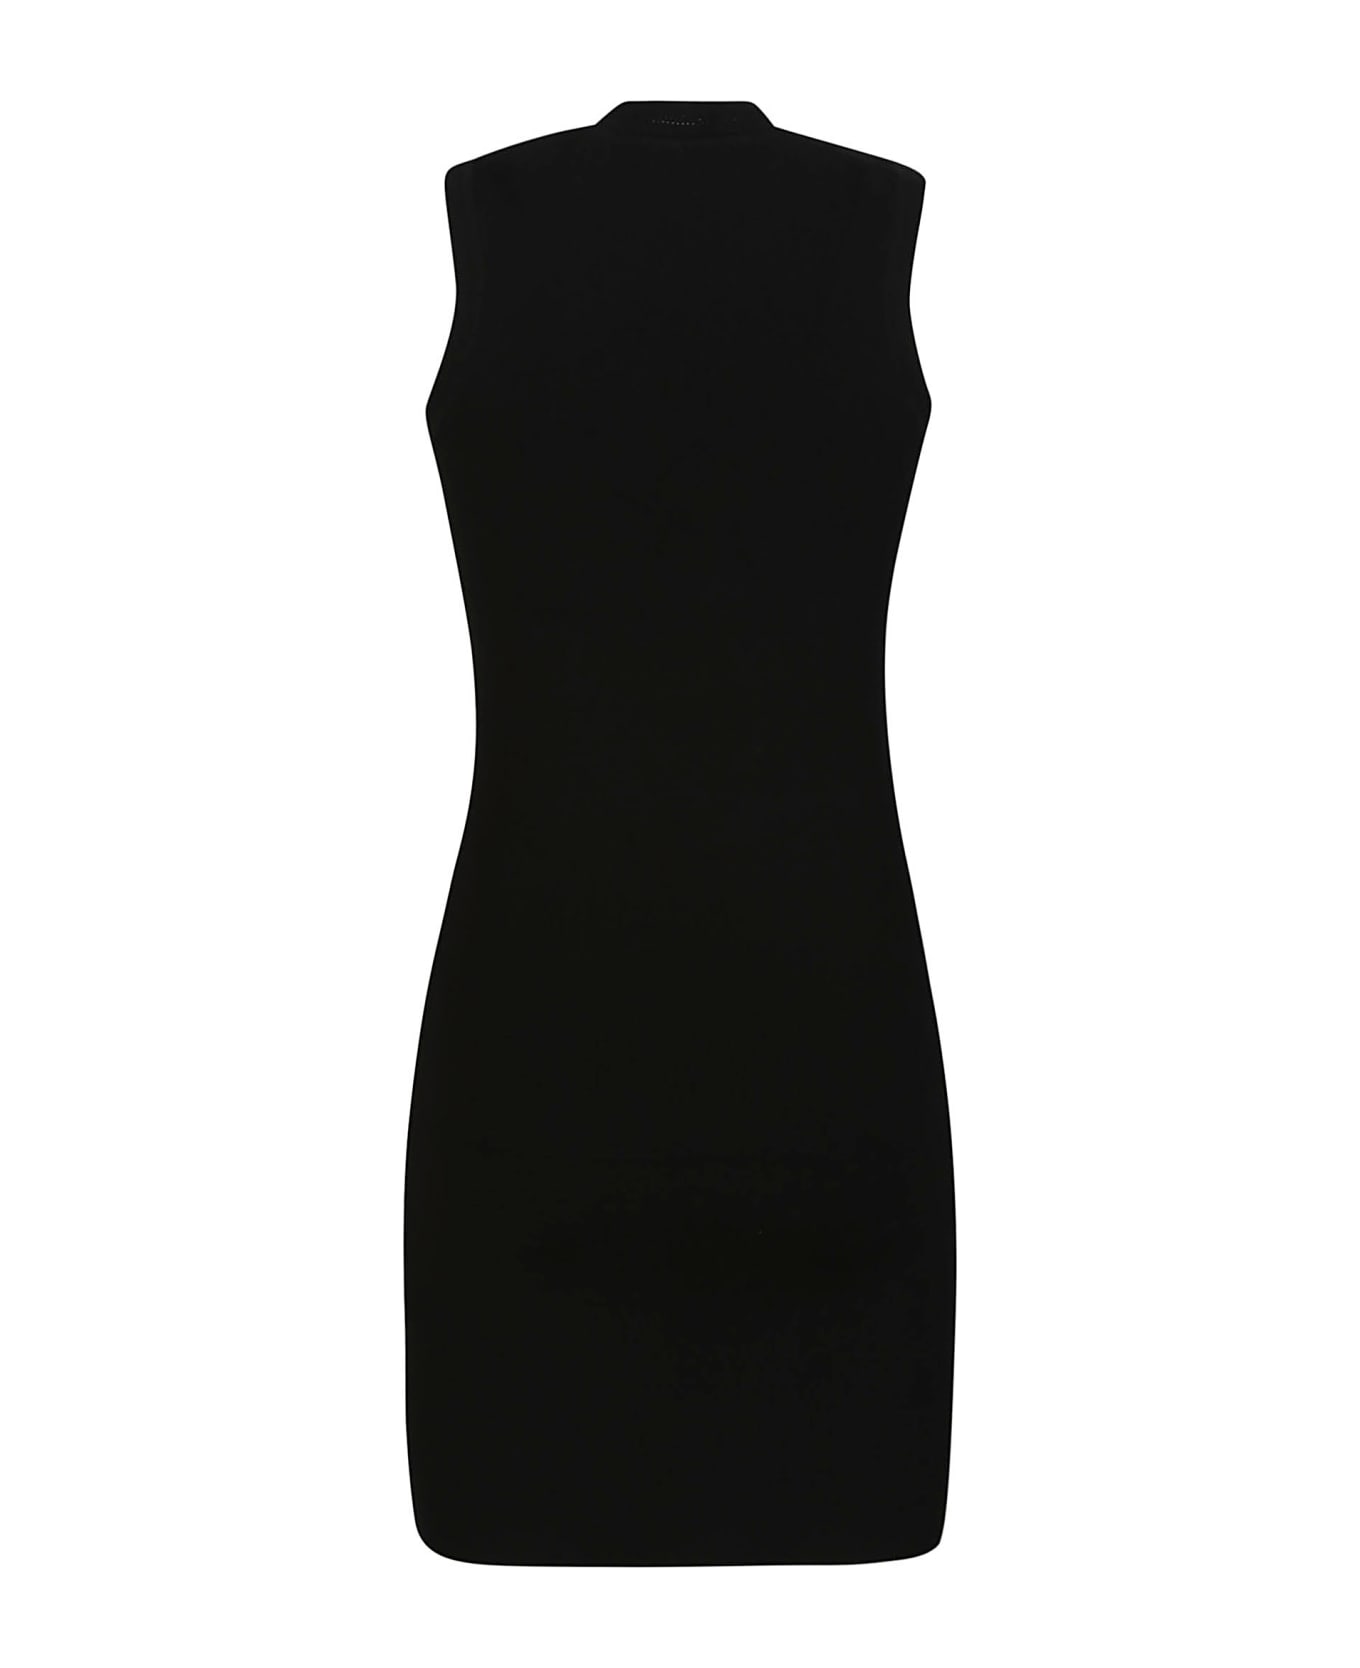 Victoria Beckham Fitted Mini Dress - Black